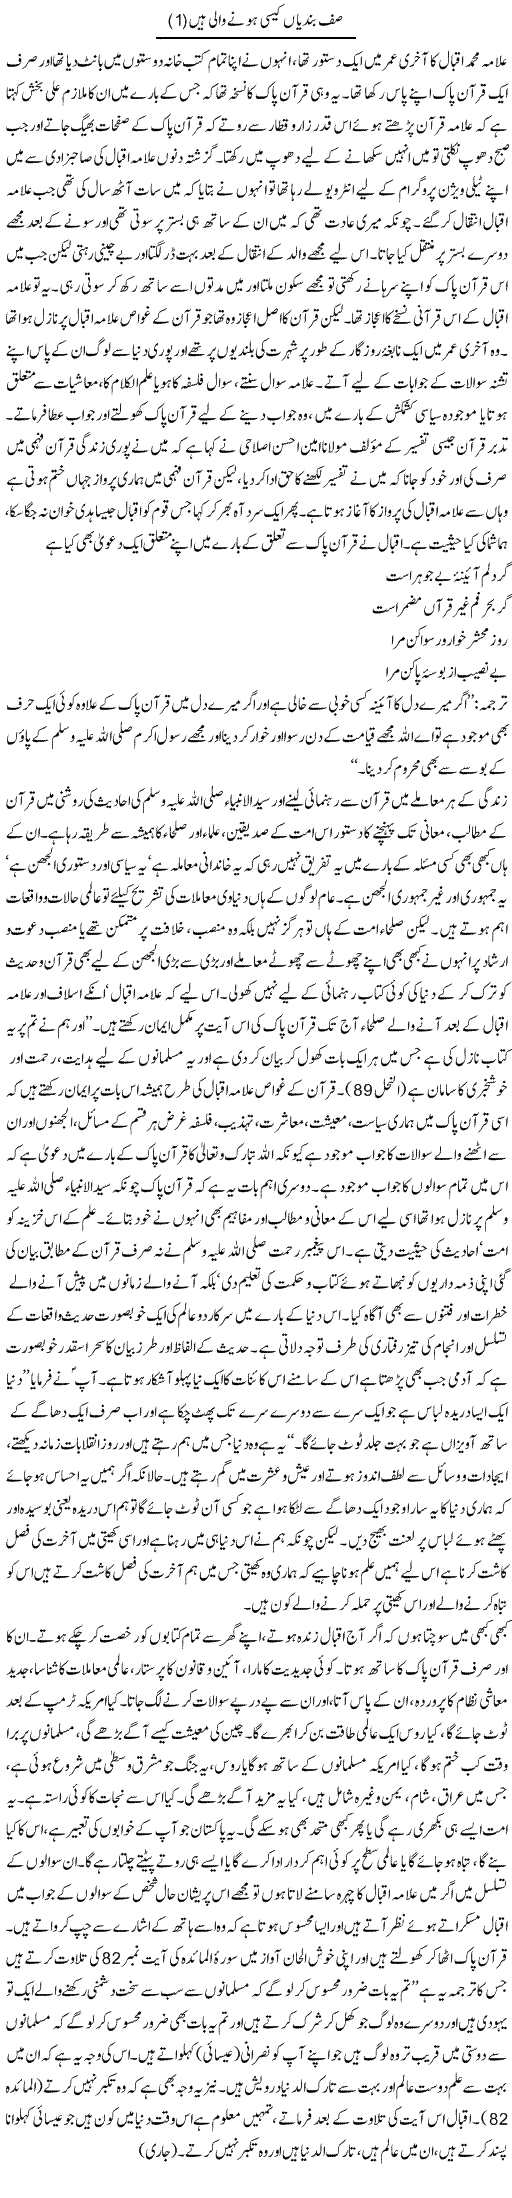 Saf Bandian Kaisi Honay Wali Hain (1) | Orya Maqbool Jan | Daily Urdu Columns